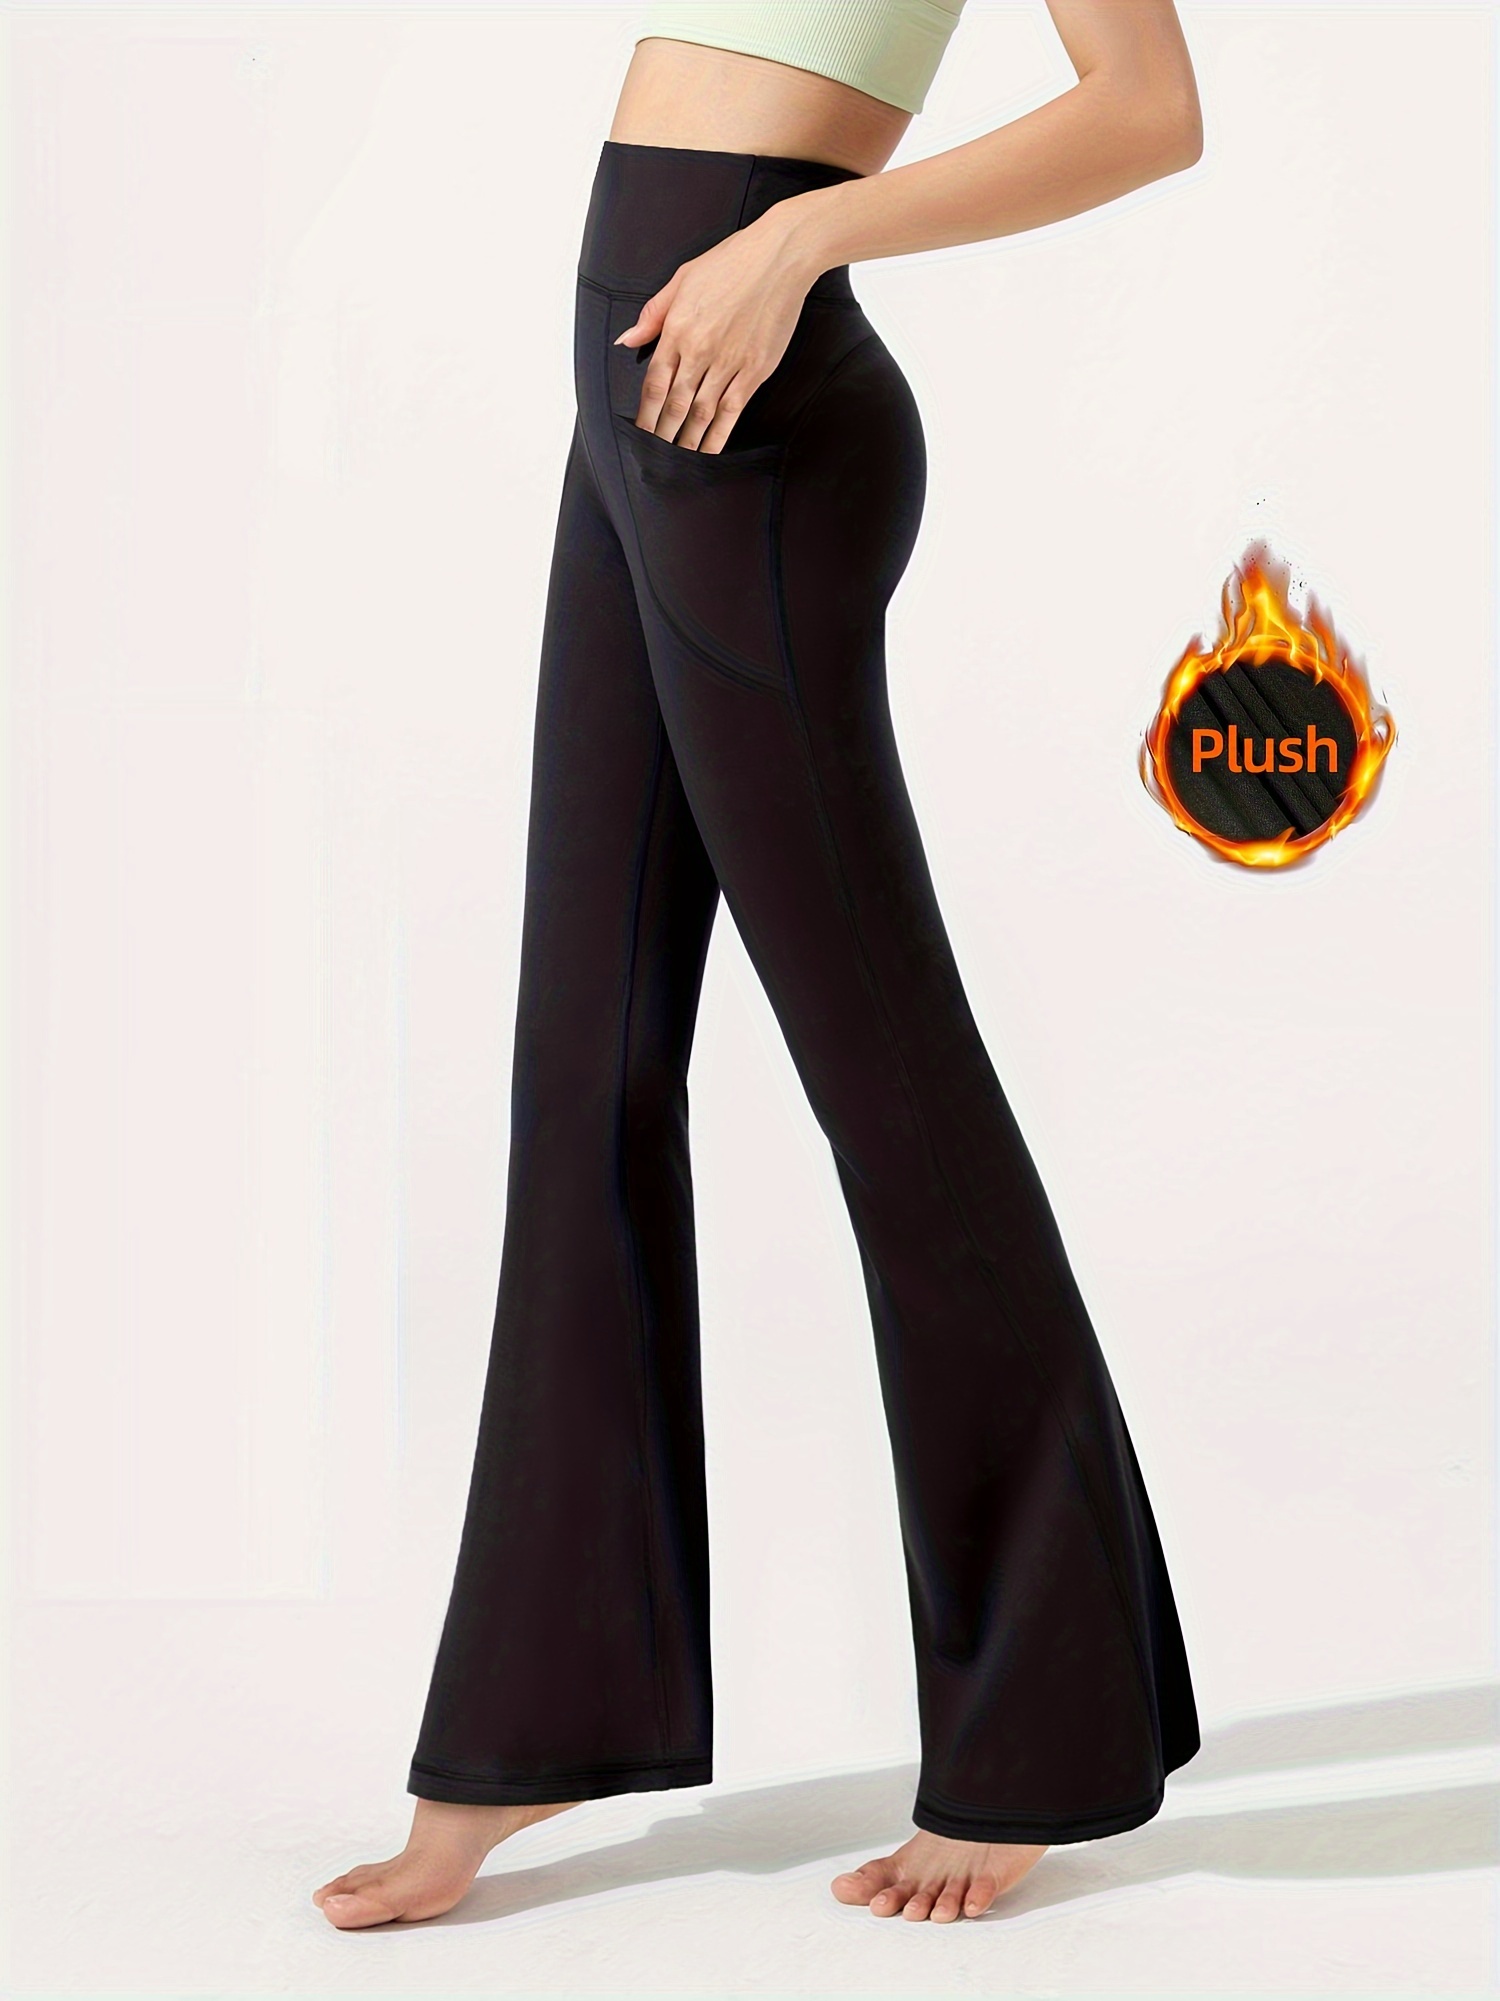 Black Flared Pocket Yoga Pants, Women's Bottom